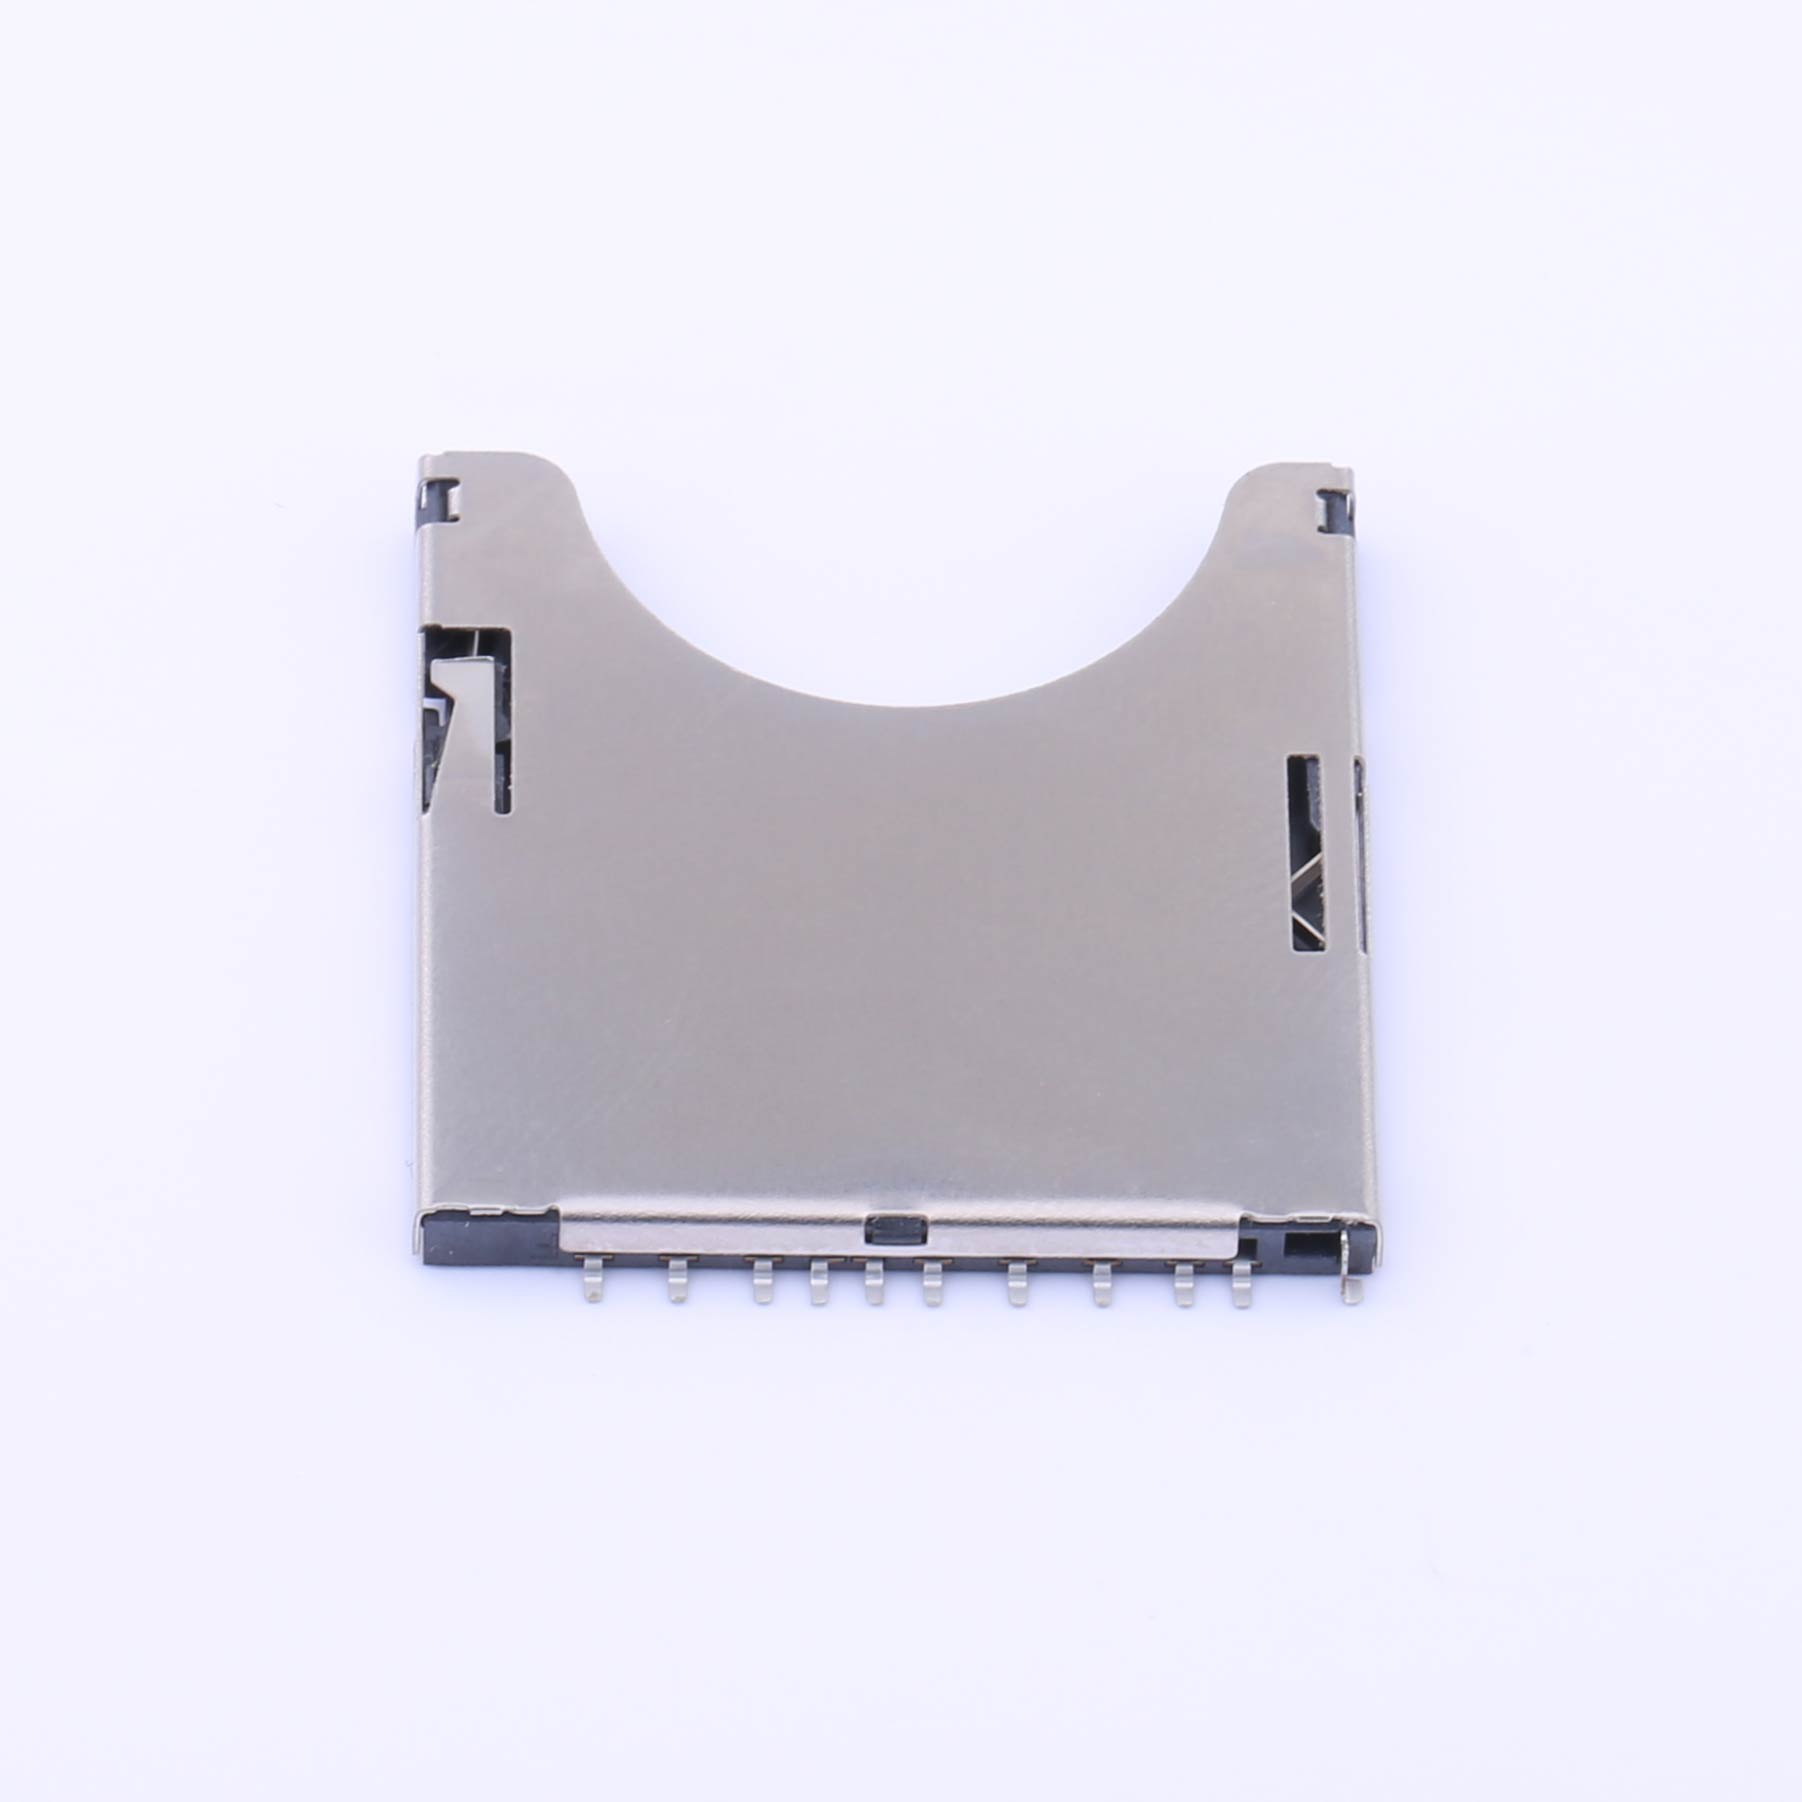 Kinghelm SD Card Connector standard SD card seat - KH-SD2829-U